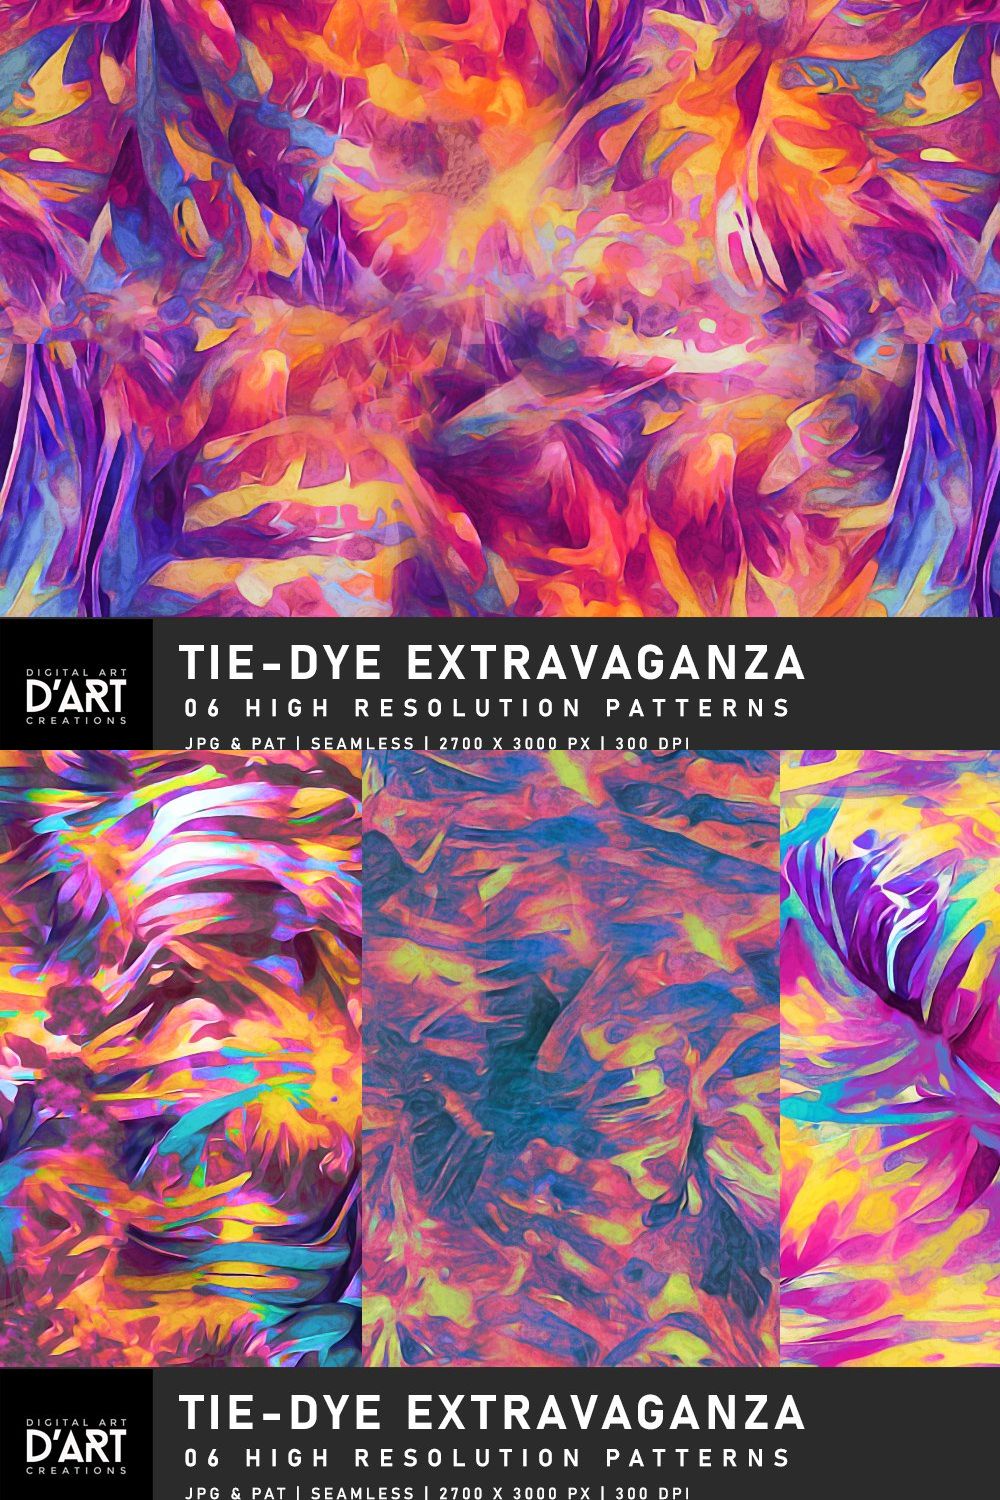 Tie-Dye Extravaganza pinterest preview image.